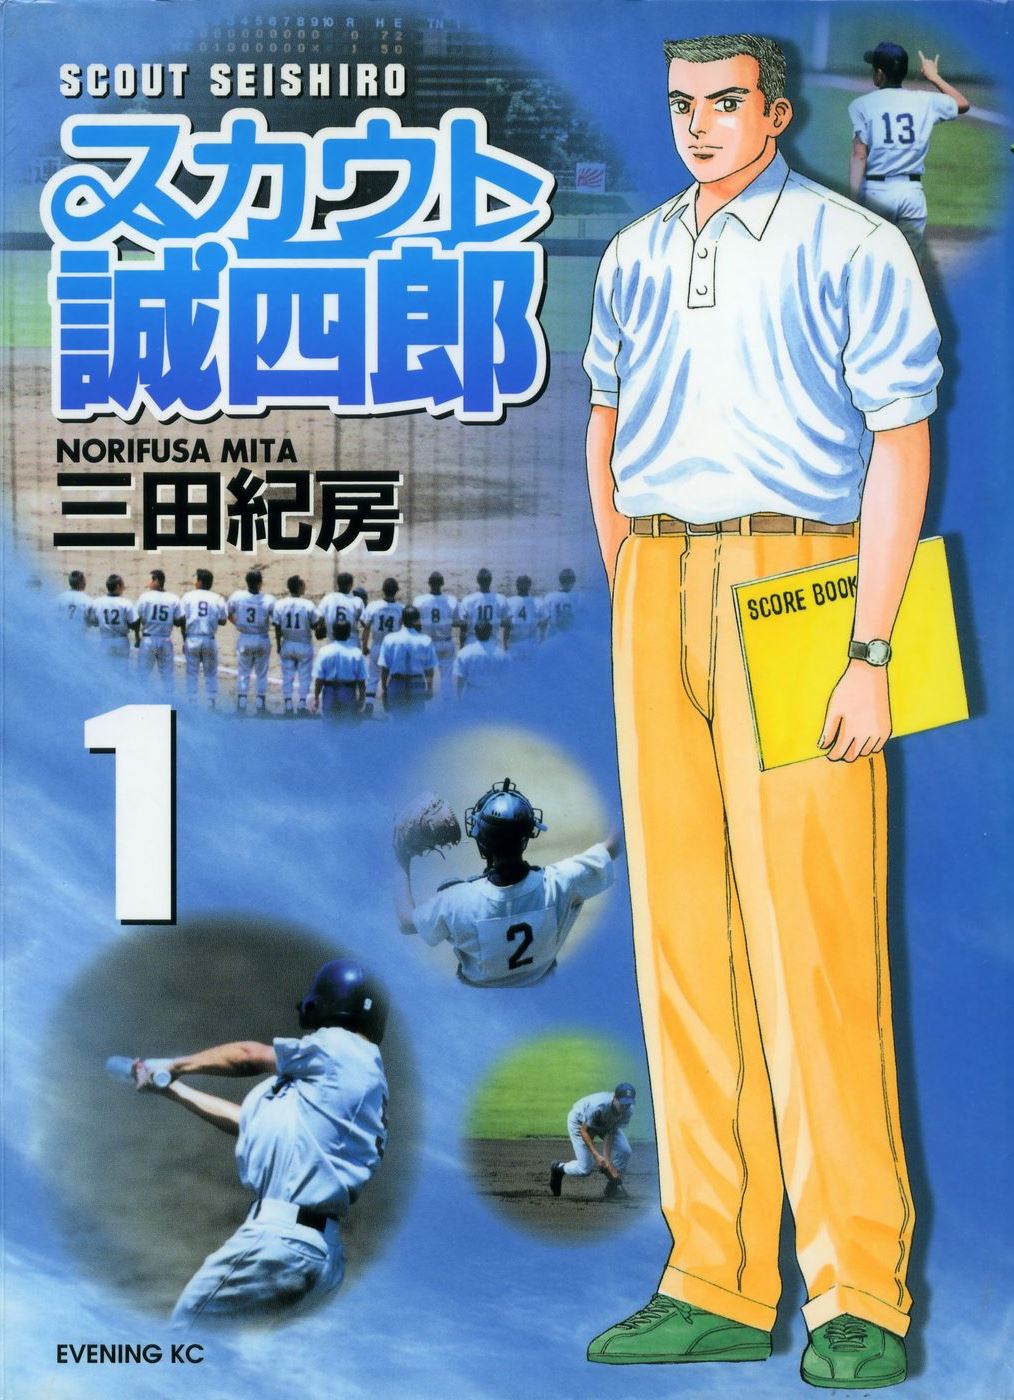 Scout Seishirou manga review